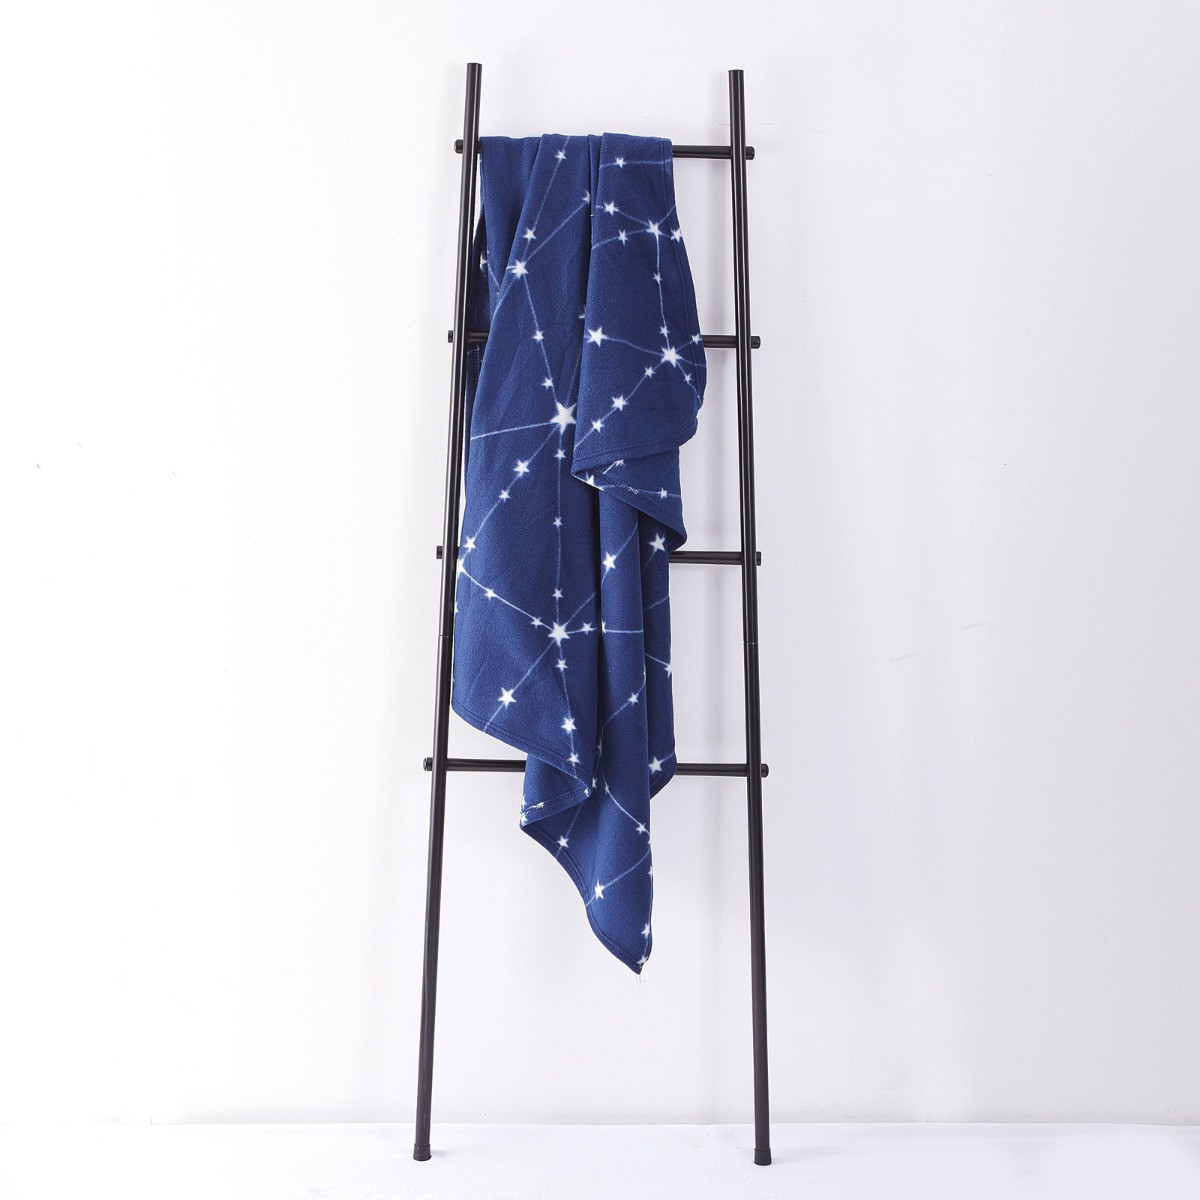 Dreamscene Galaxy Star Fleece Throw, Navy Blue - 120 x 150cm>